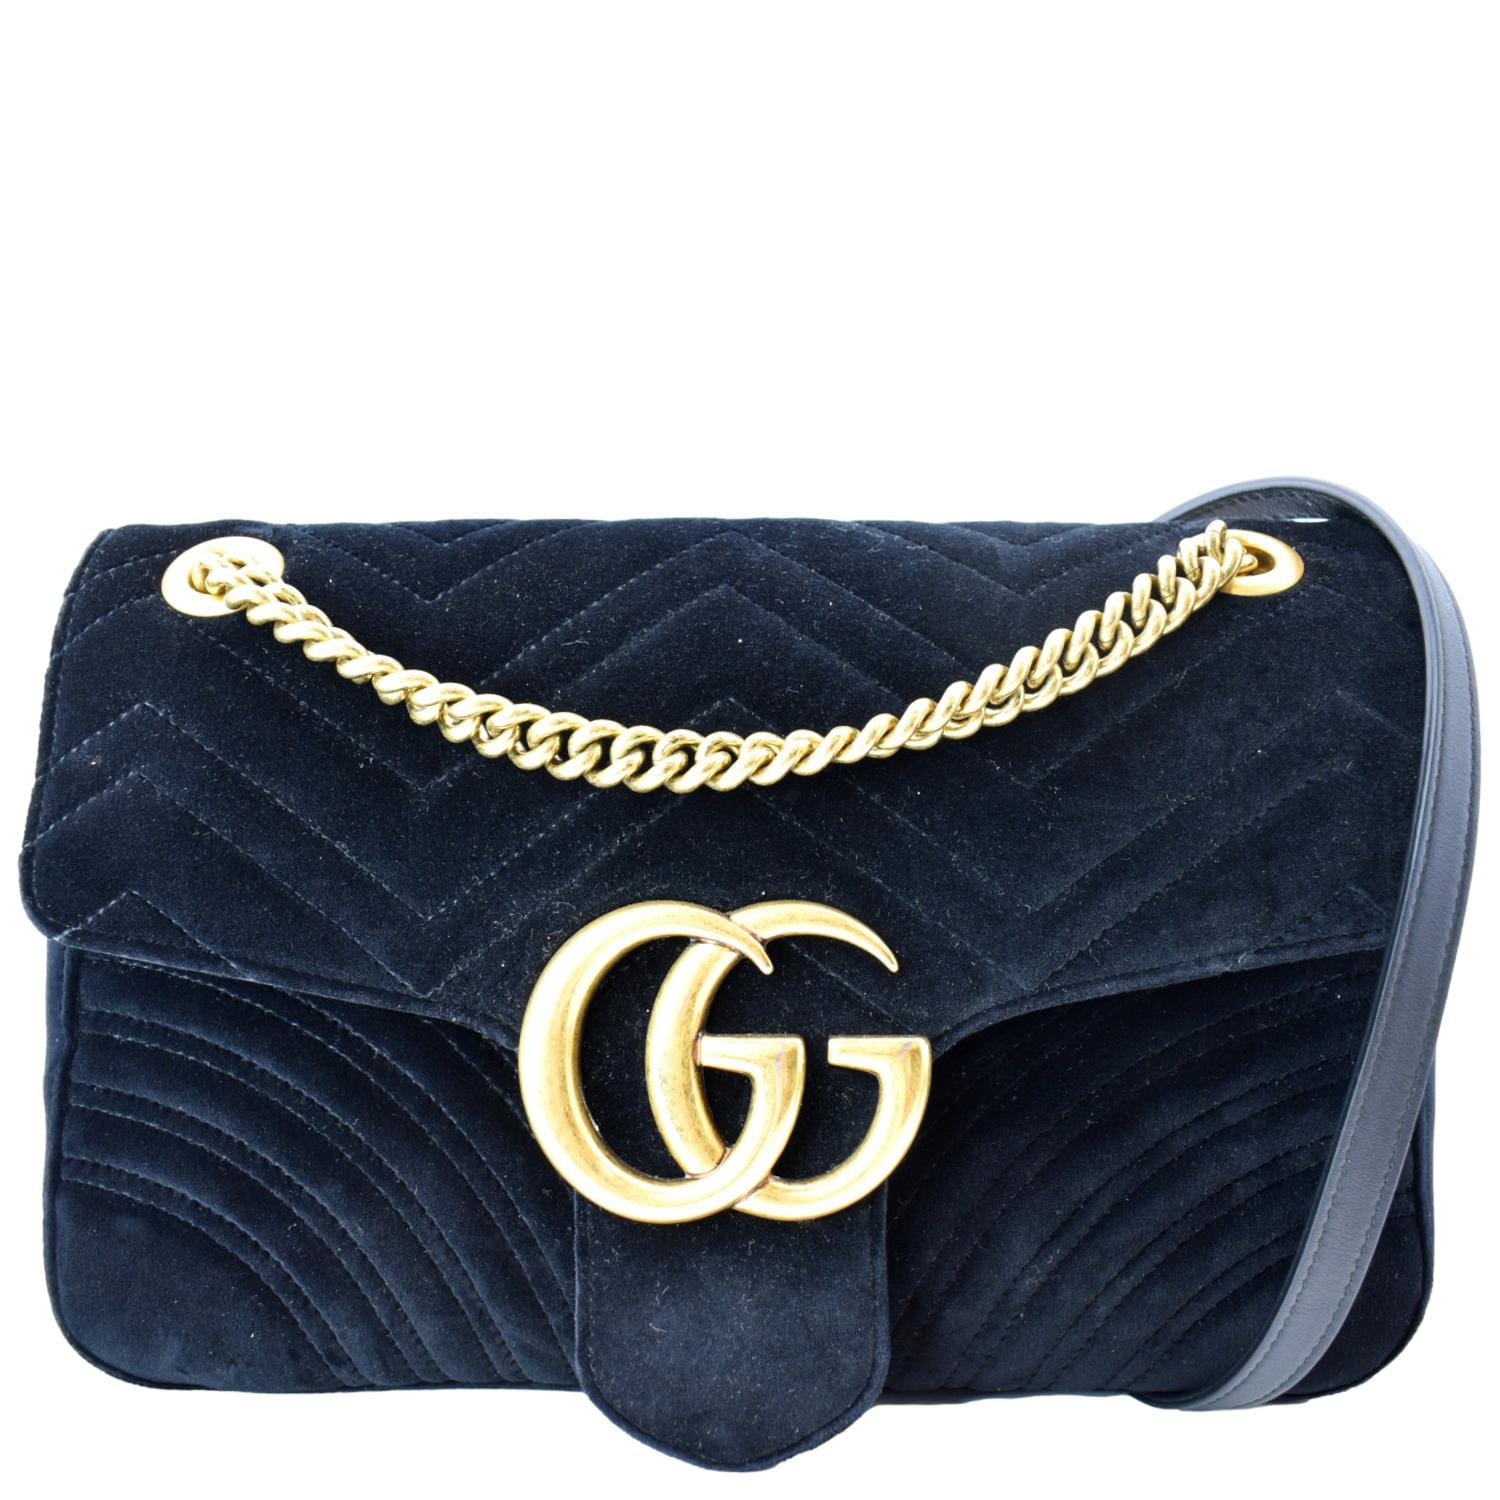 Gucci Women's Bag - Navy